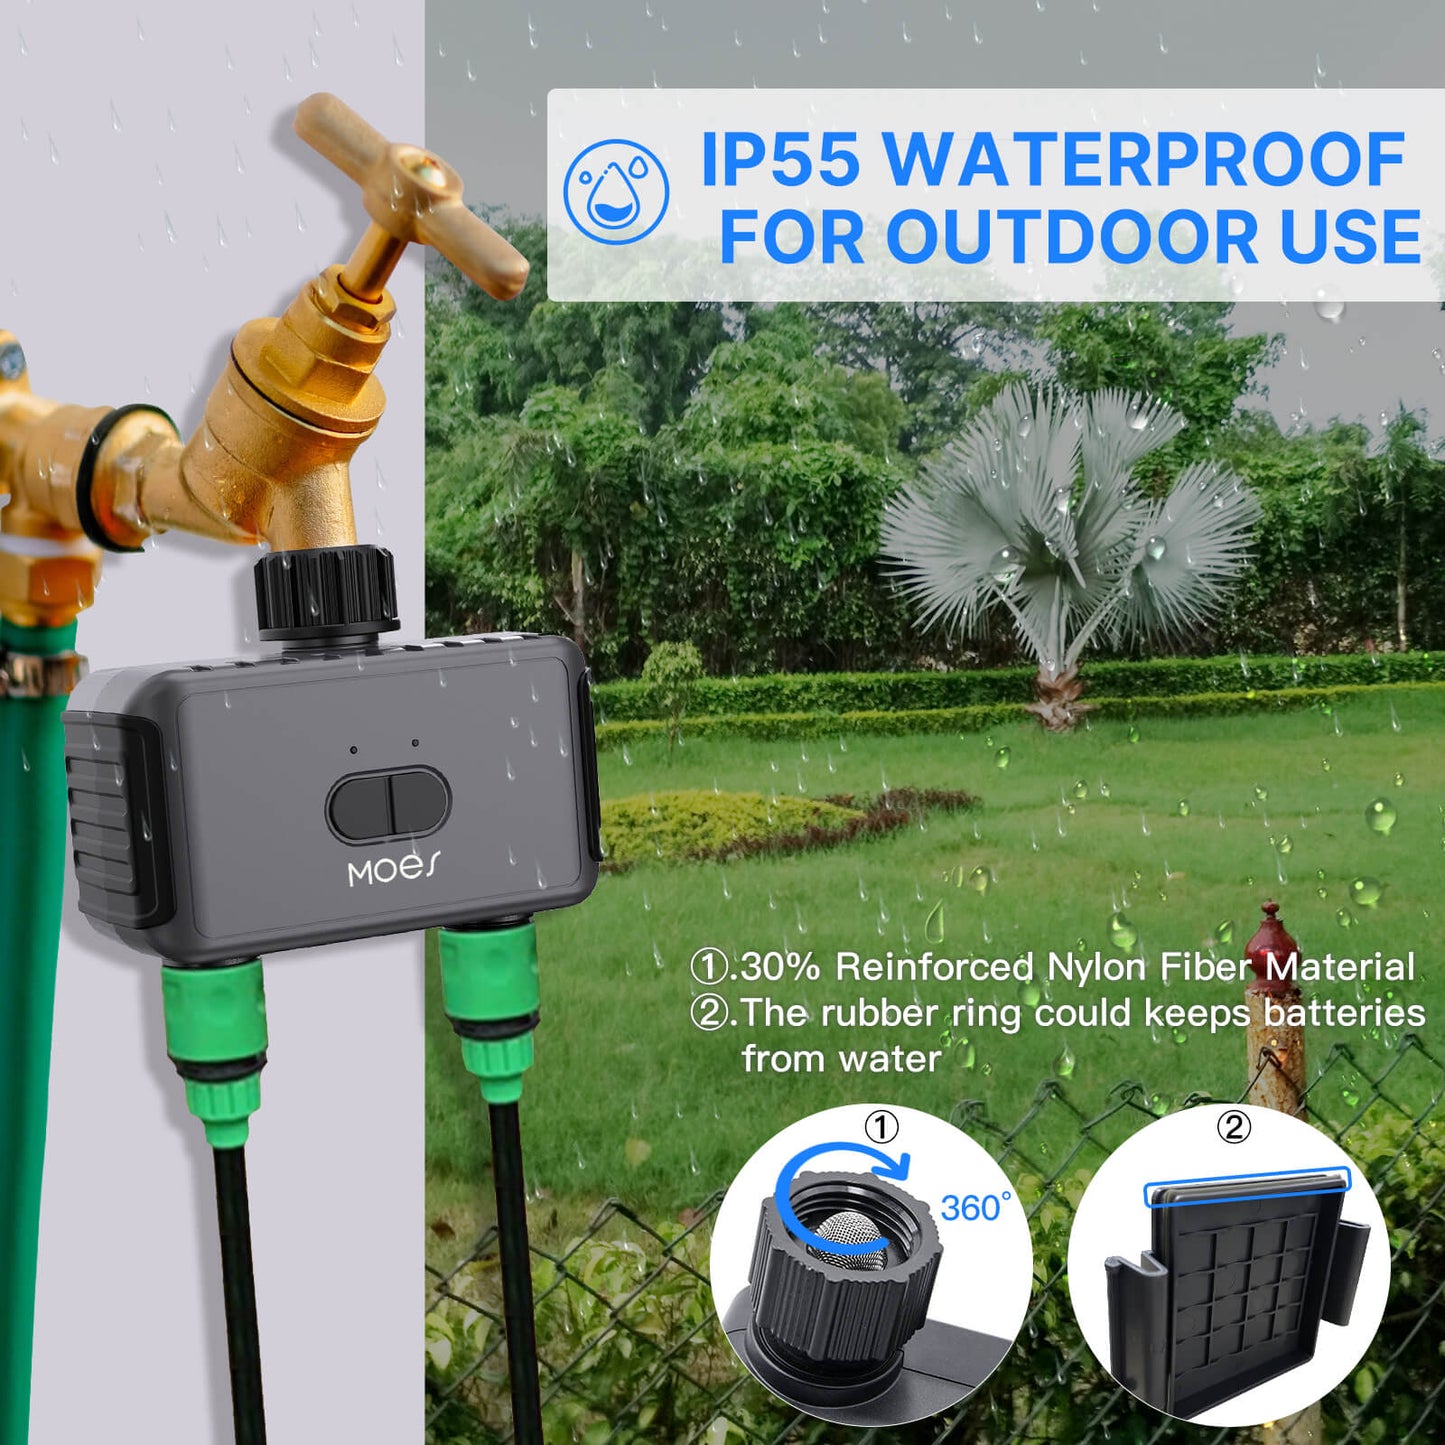 IP55 waterproof for outdoor USE - MOES